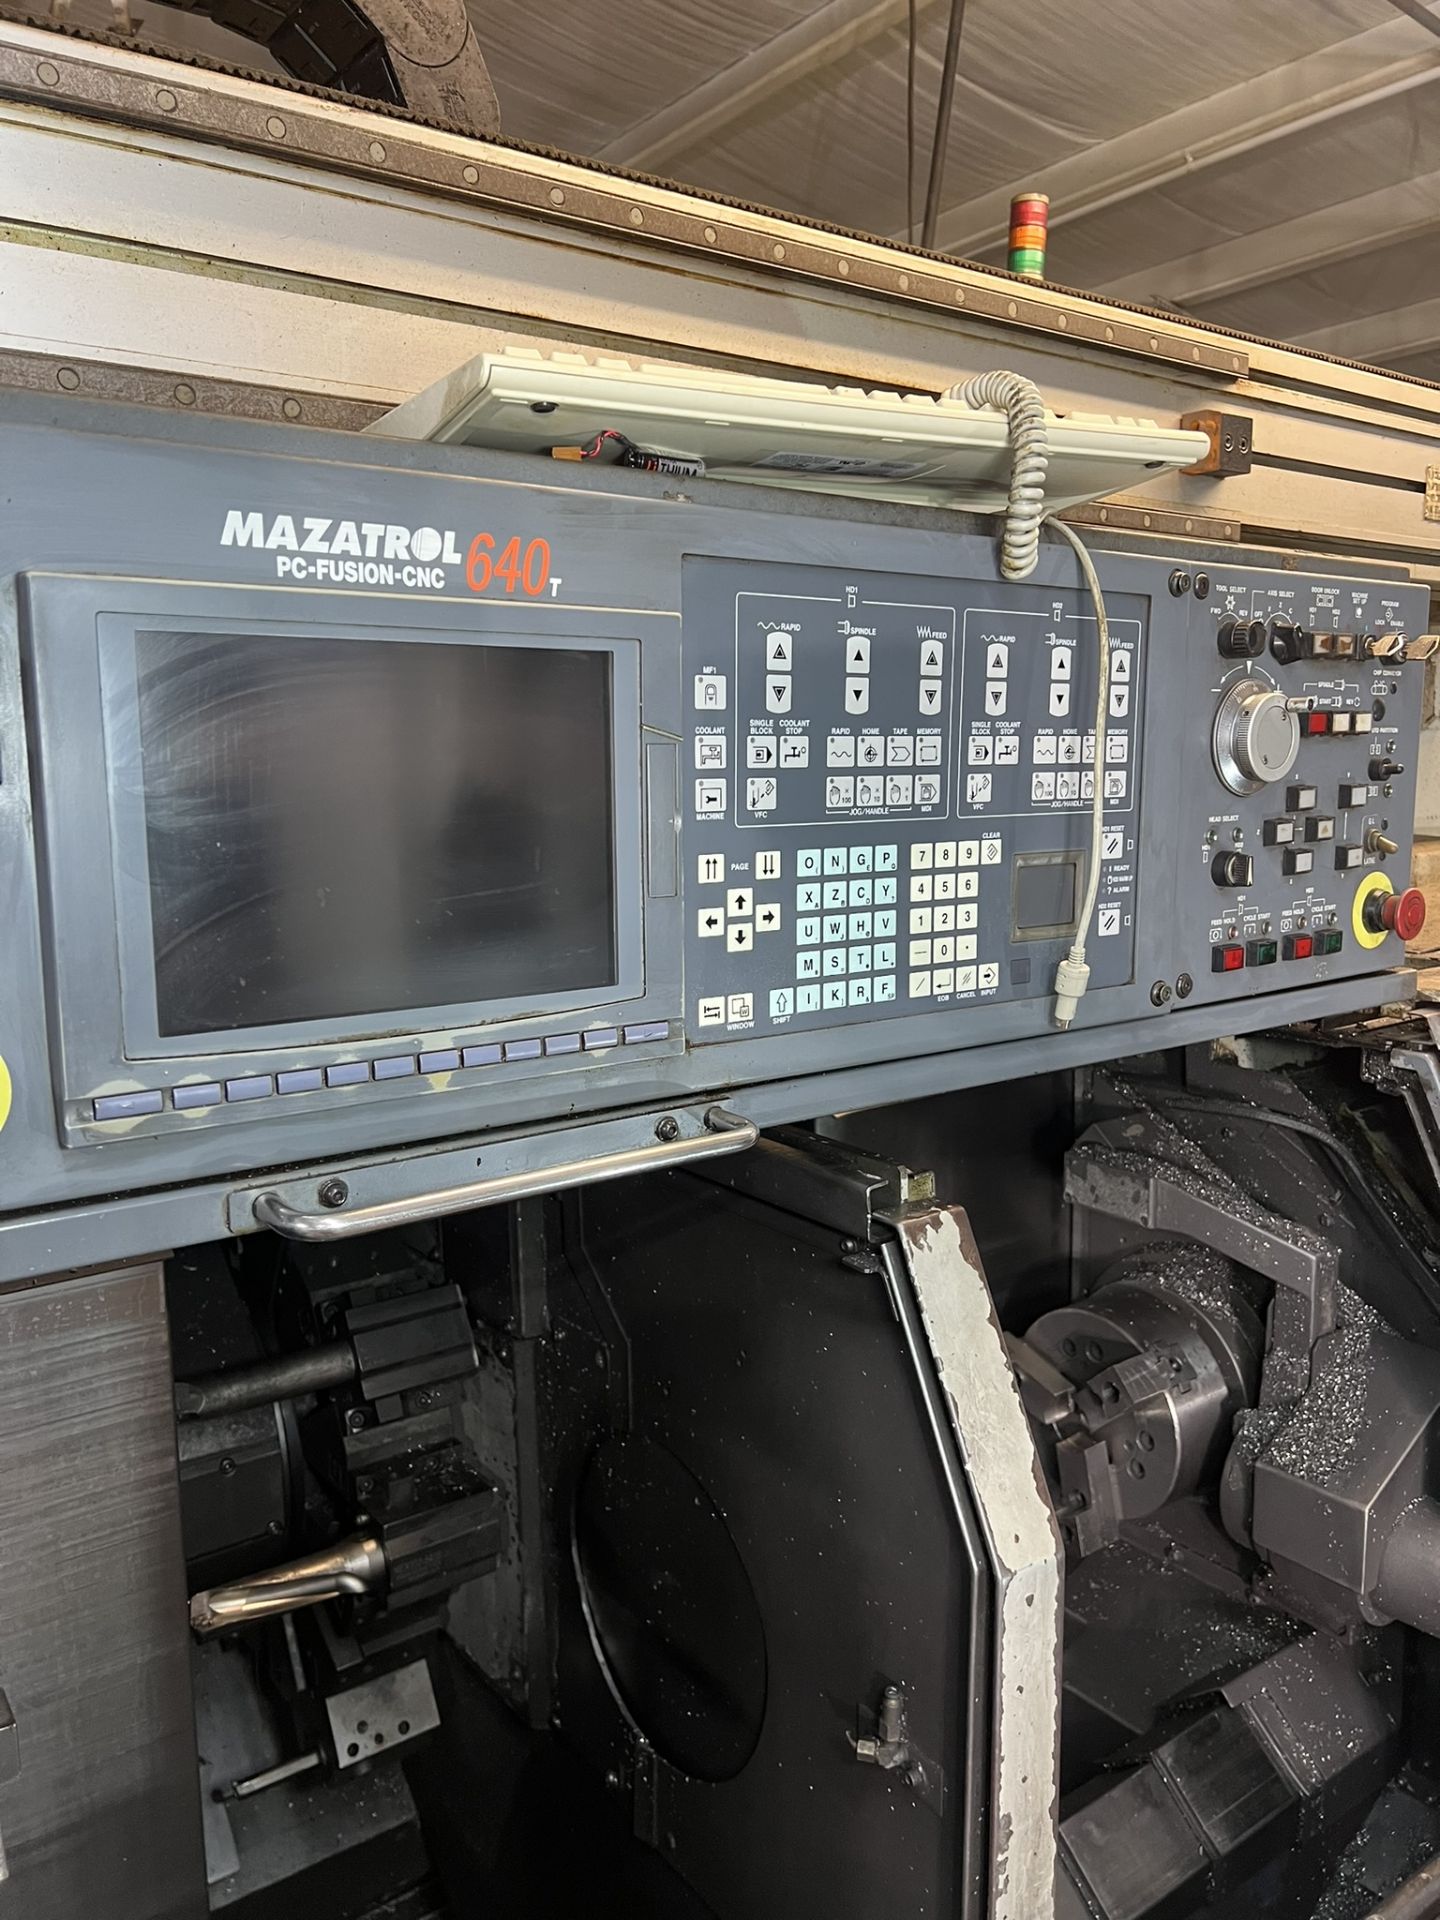 Mazak Model DT20 CNC with Mazatrol 640T Control Panel Mazak Flex-GL100F Loader and Mayfran - Image 6 of 11